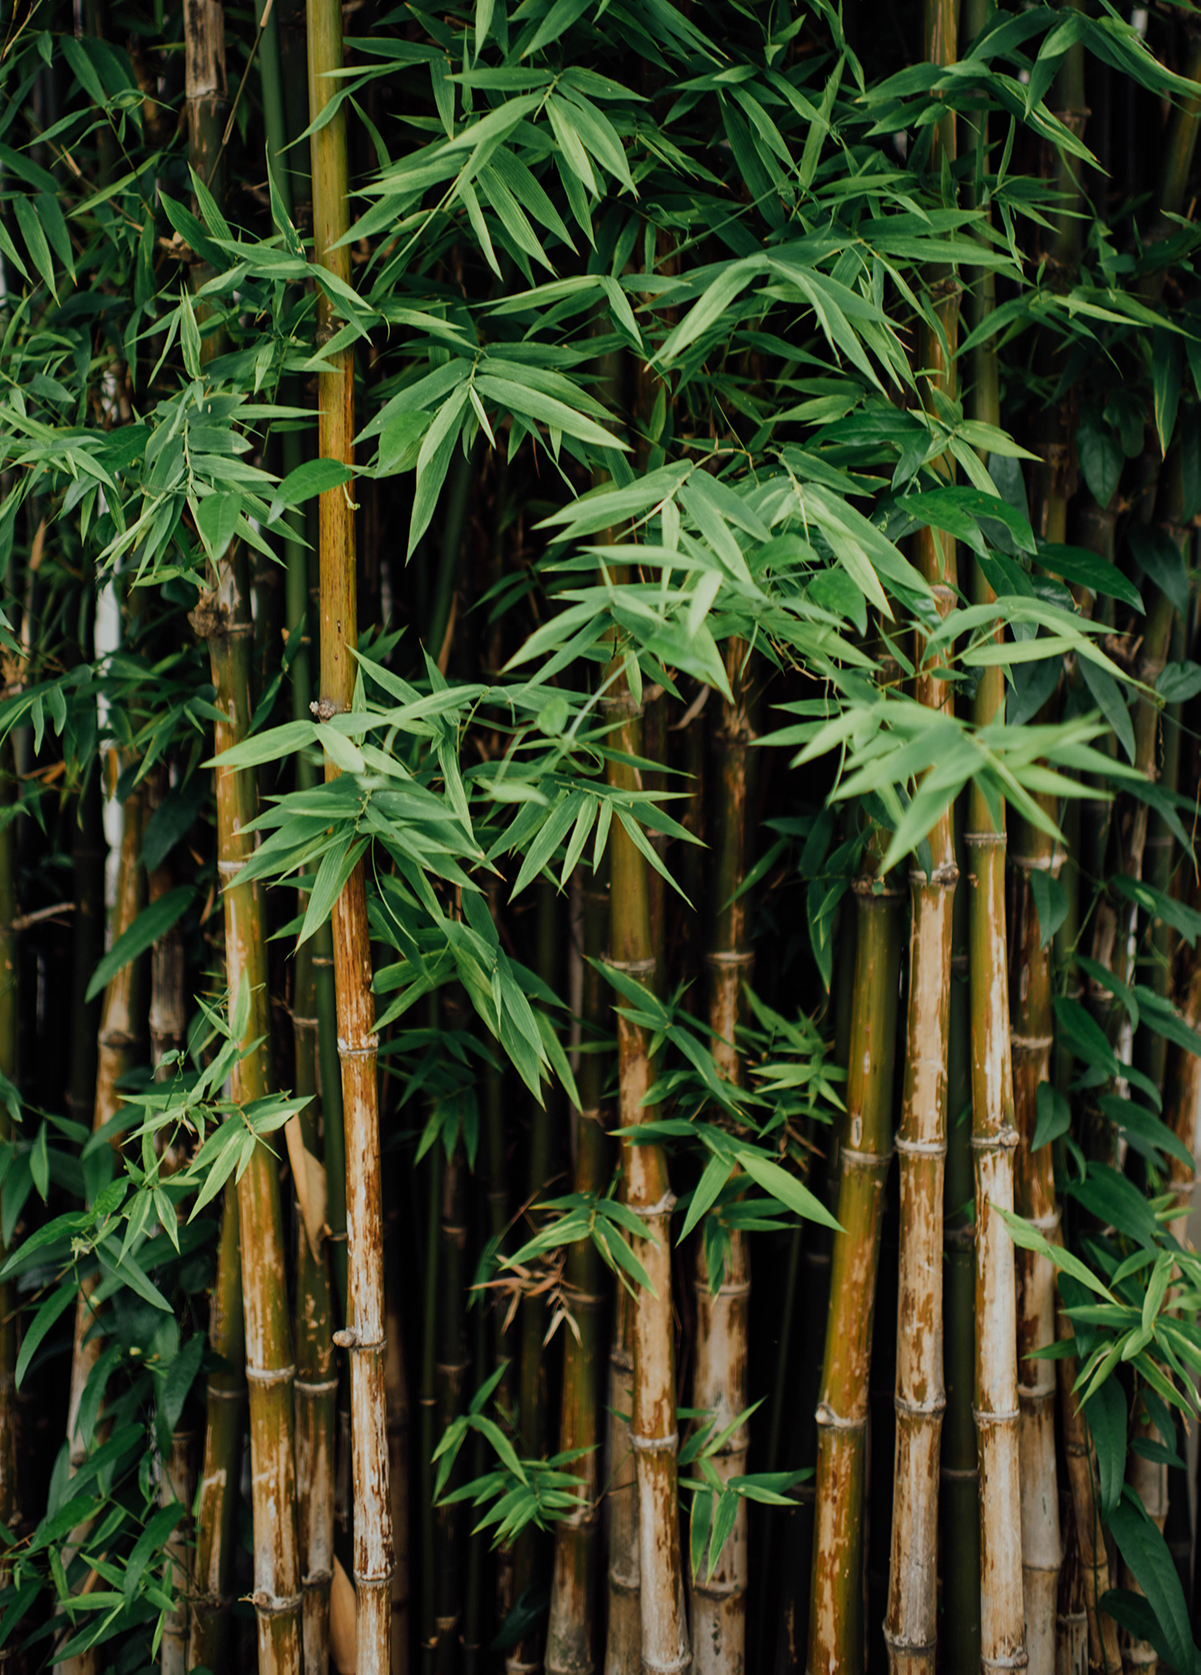 Bamboo Straw, Eco Friendly and Zero Waste